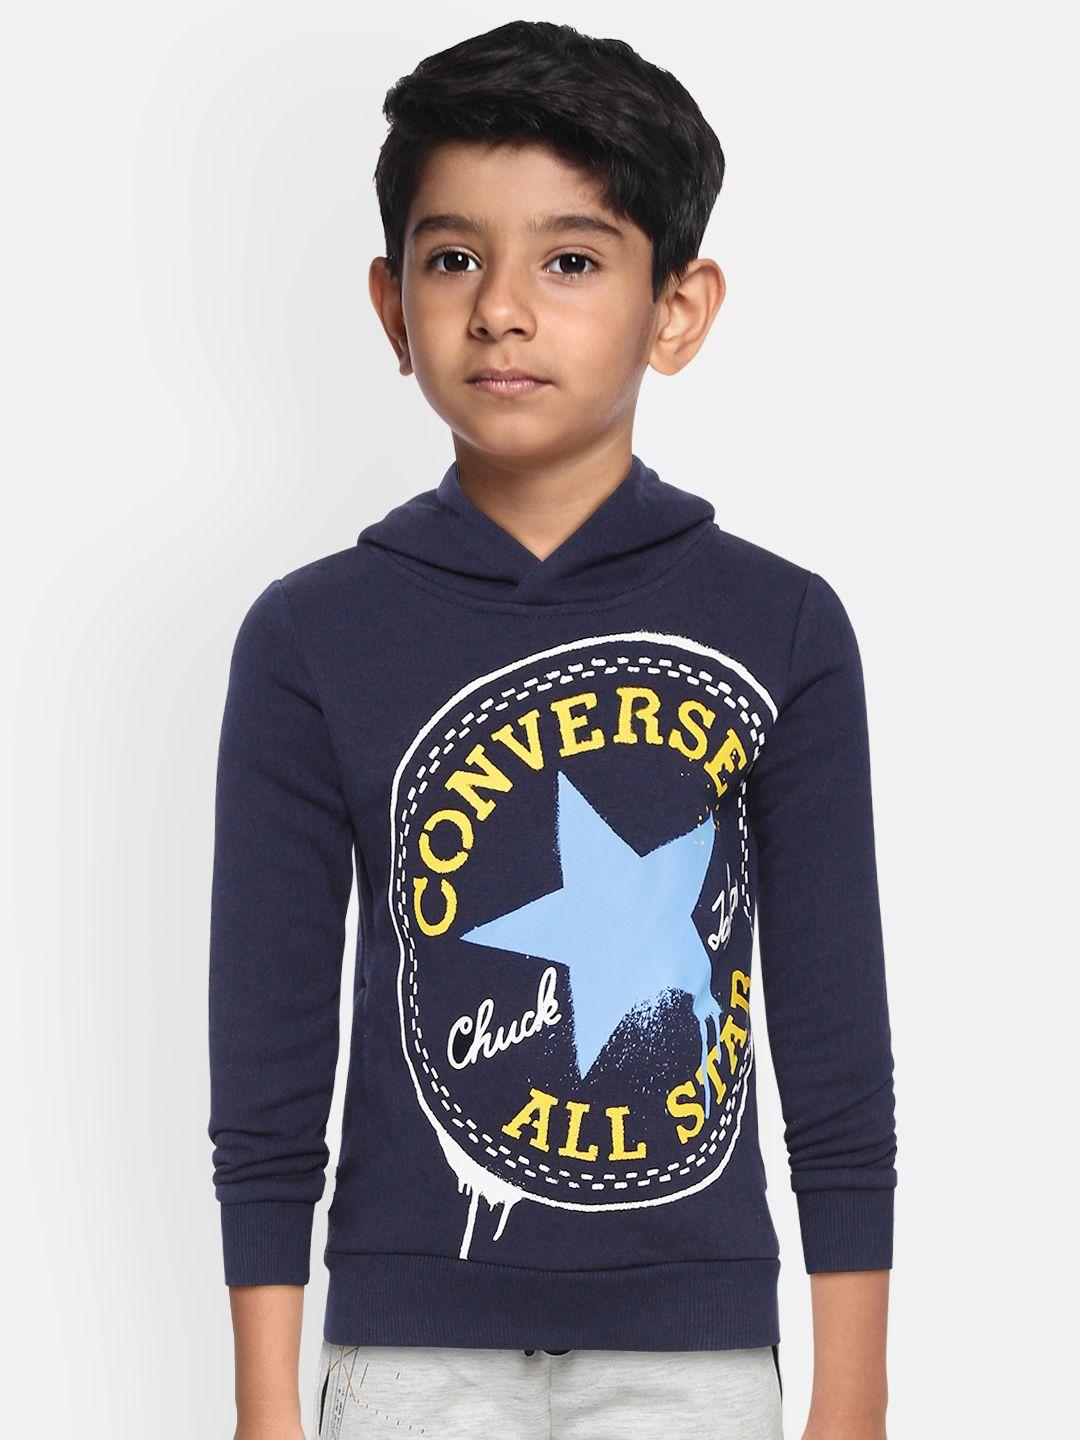 converse boys navy blue & mustard yellow brand logo print hooded sweatshirt